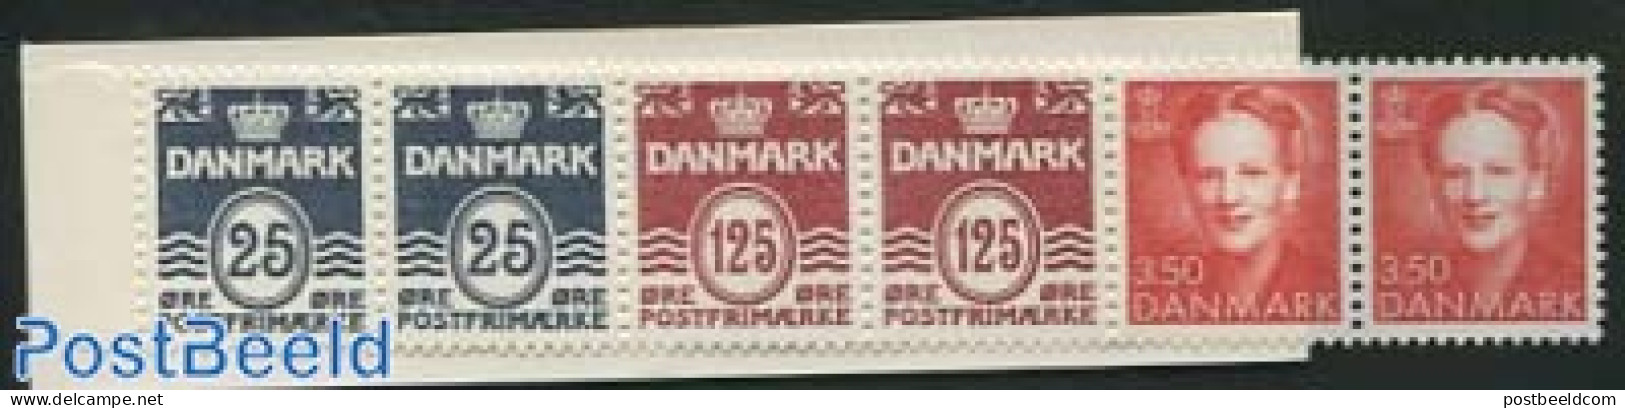 Denmark 1991 Definitives Booklet, Mint NH, Stamp Booklets - Ongebruikt